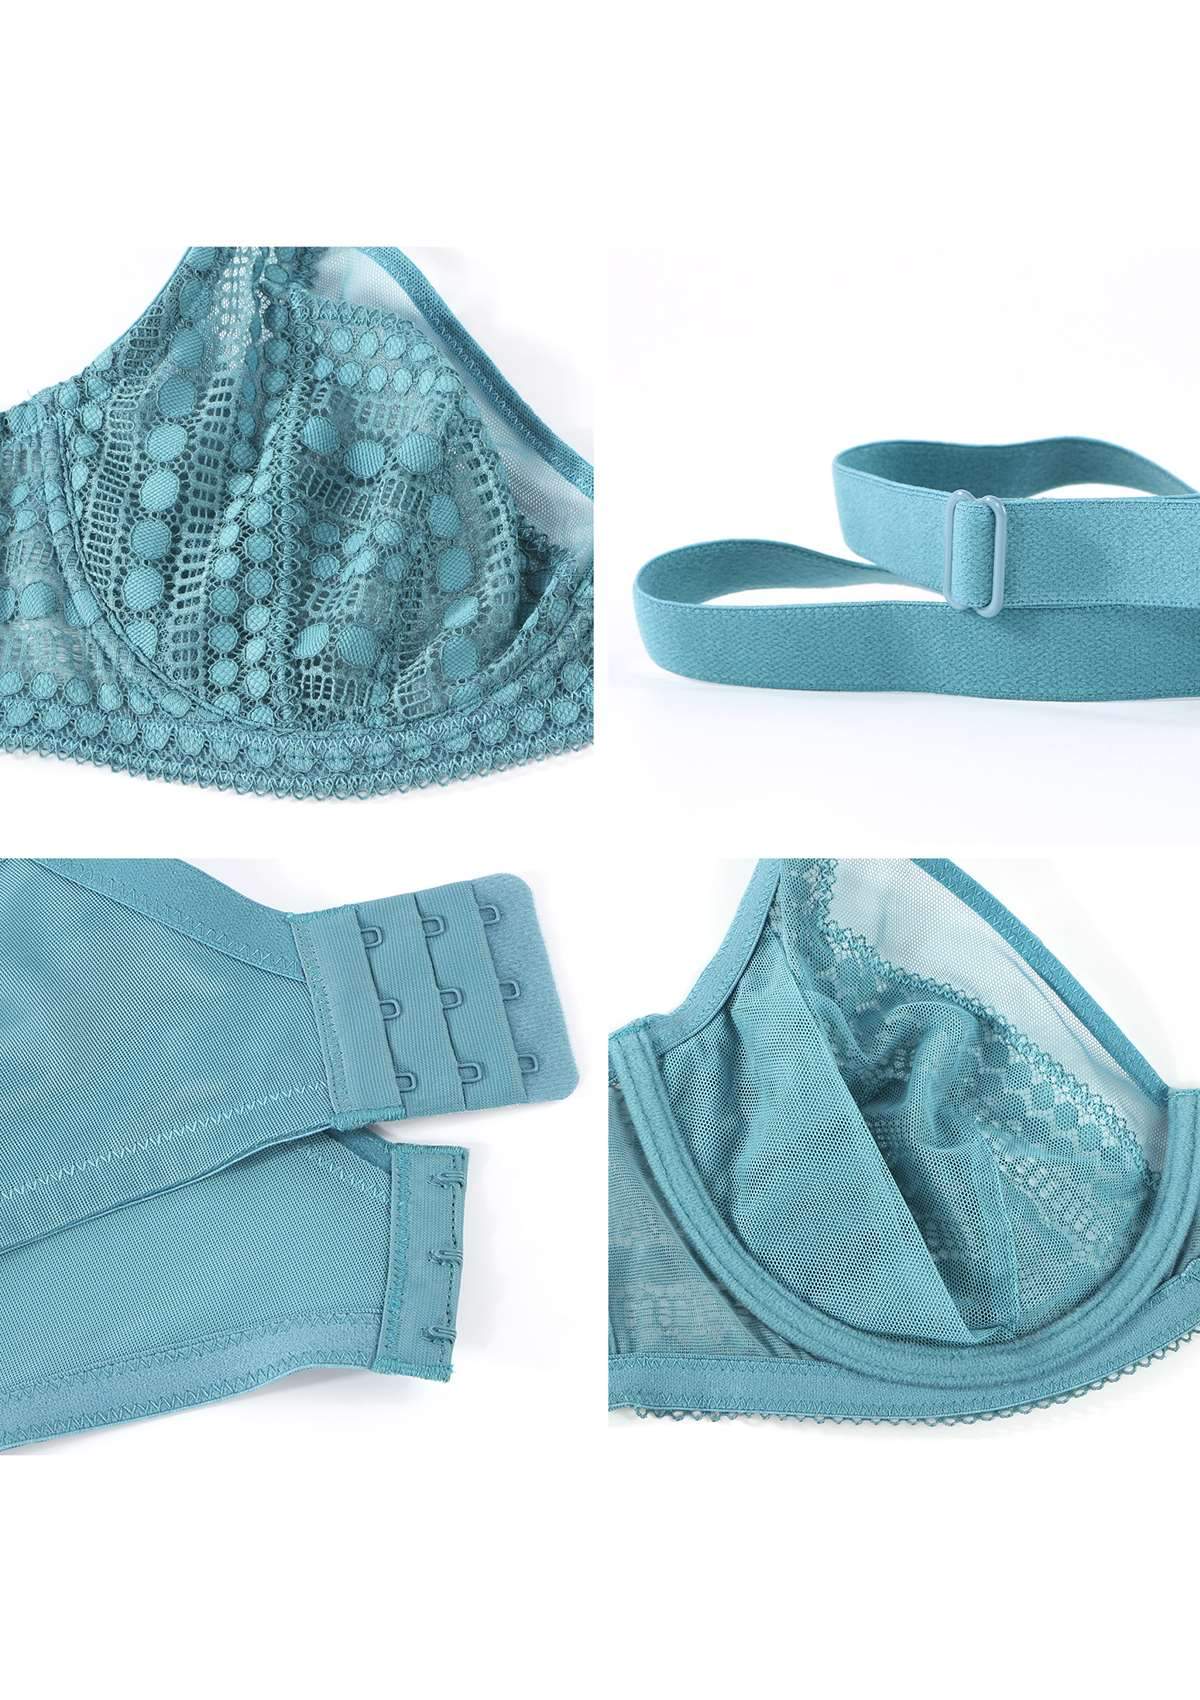 HSIA Heroine Matching Bra And Underwear Set: Bra For Big Boobs - Brittany Blue / 34 / DD/E